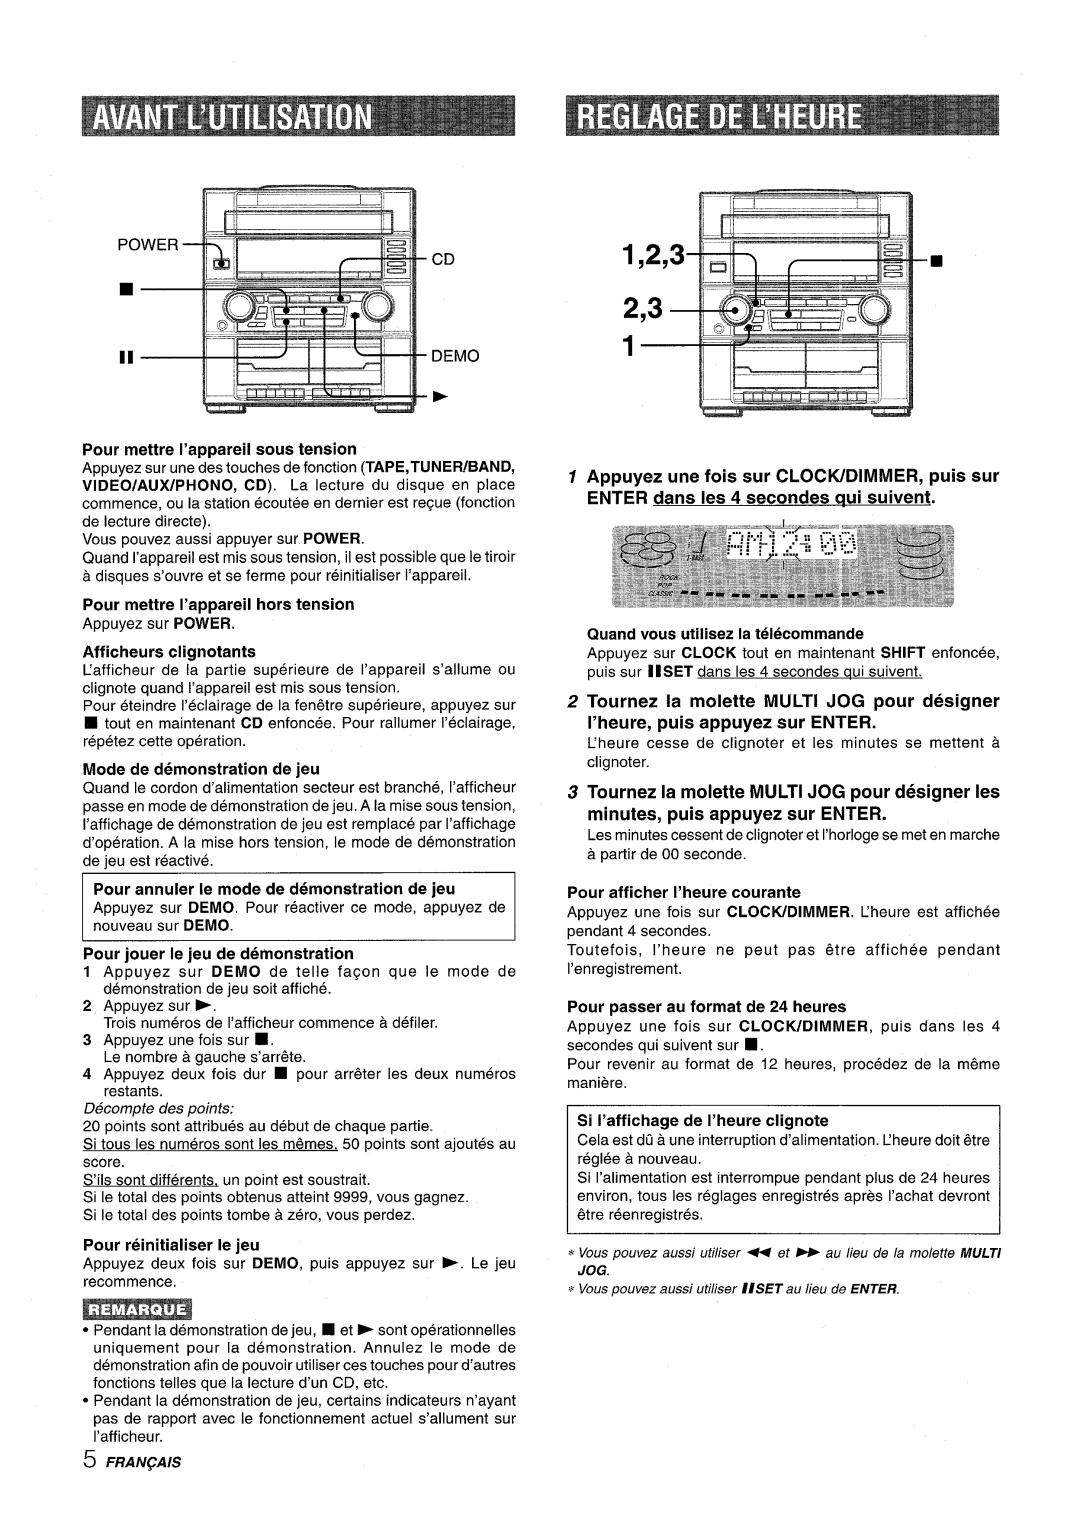 Aiwa Z-R555 manual 1F’II ------- ----4,I, Mode de demonstration de jeu, Pour jouer Ie jeu de demonstration 